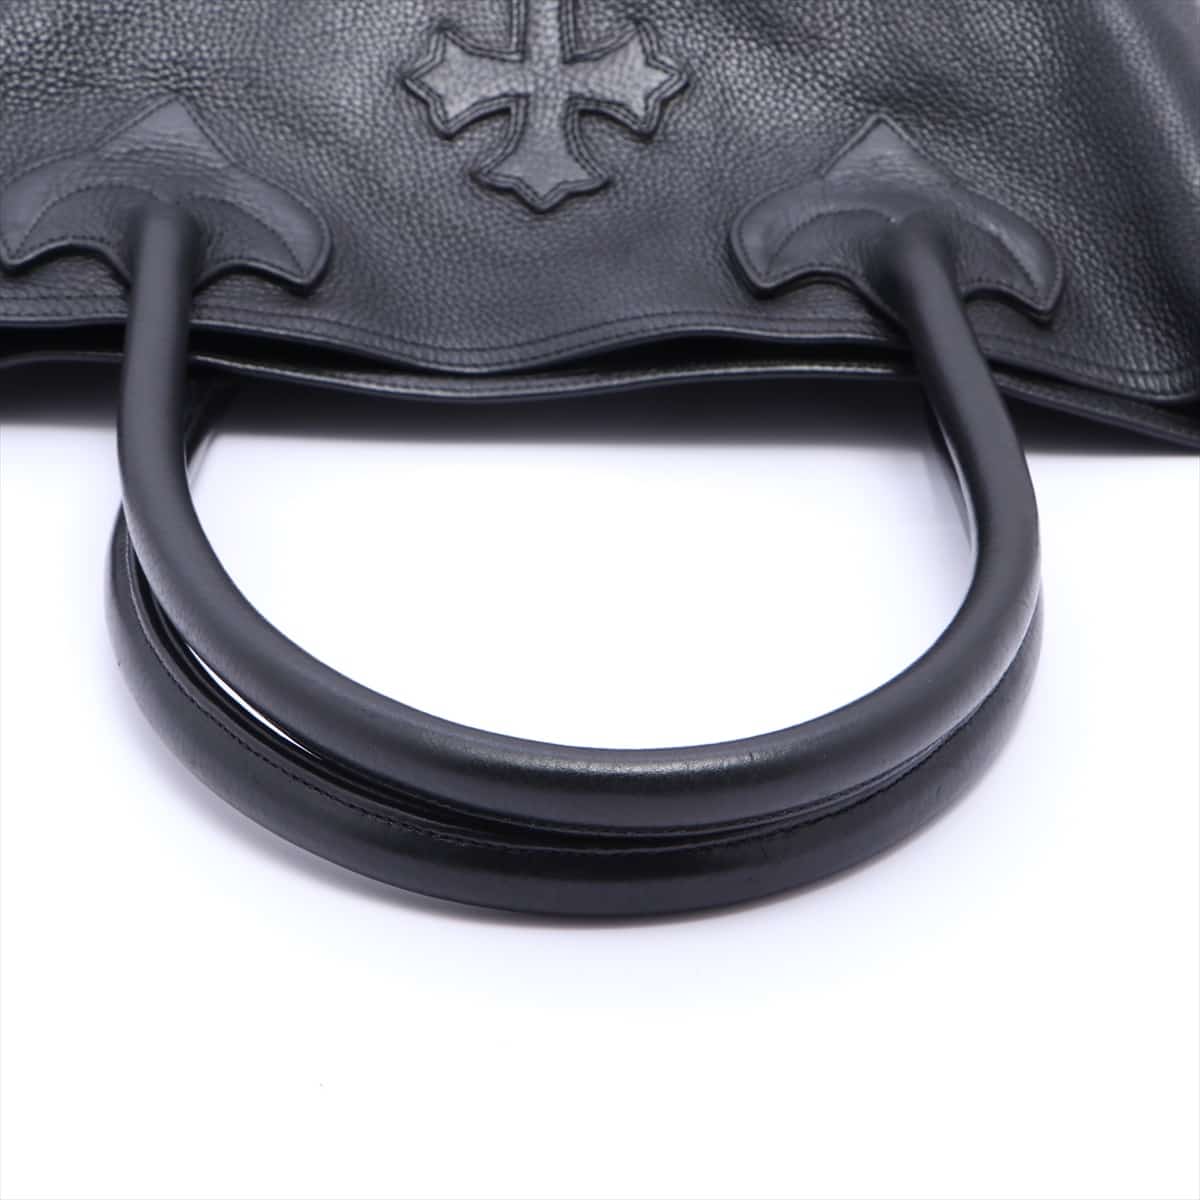 Chrome Hearts FS Tote bag Leather Black